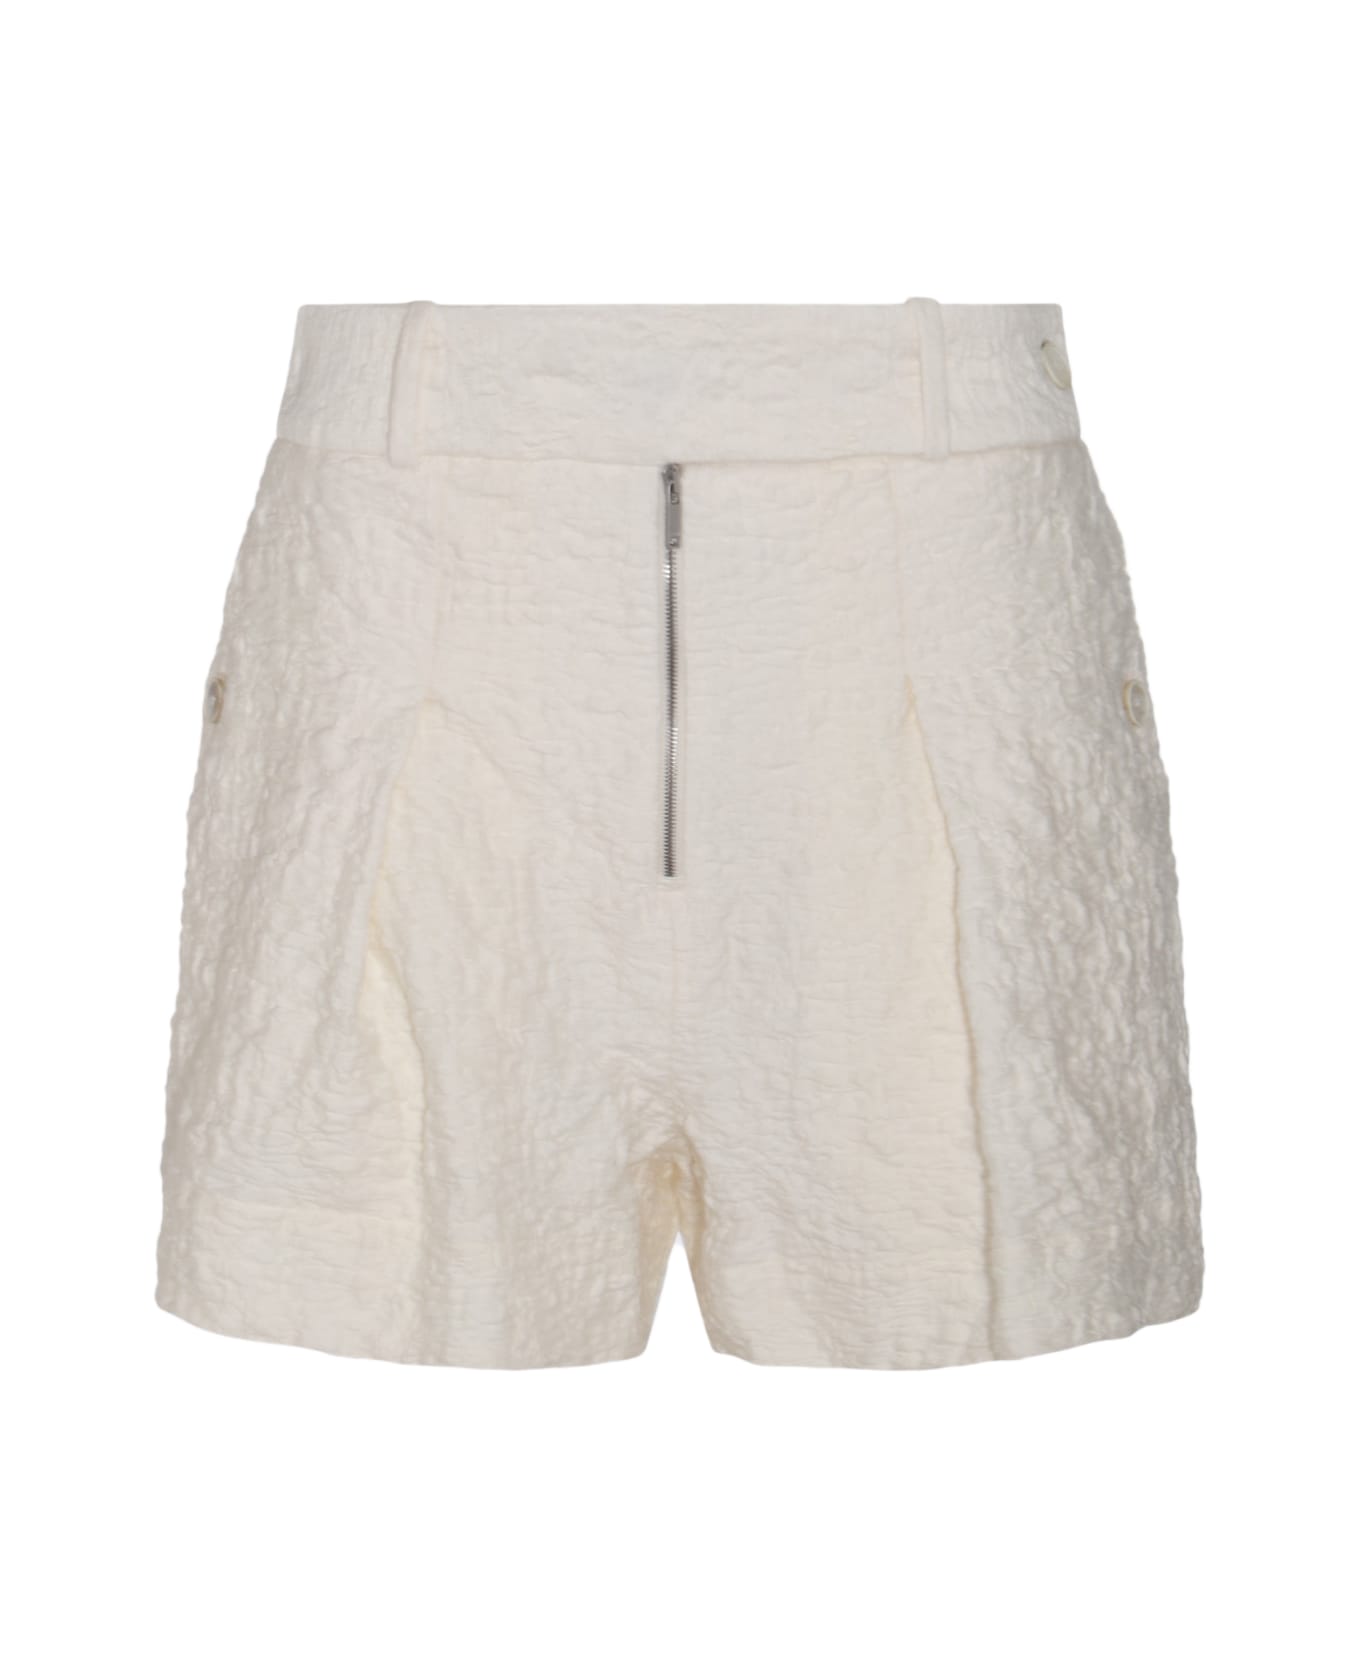 Jil Sander Porcelain Cotton Shorts - PORCELAIN